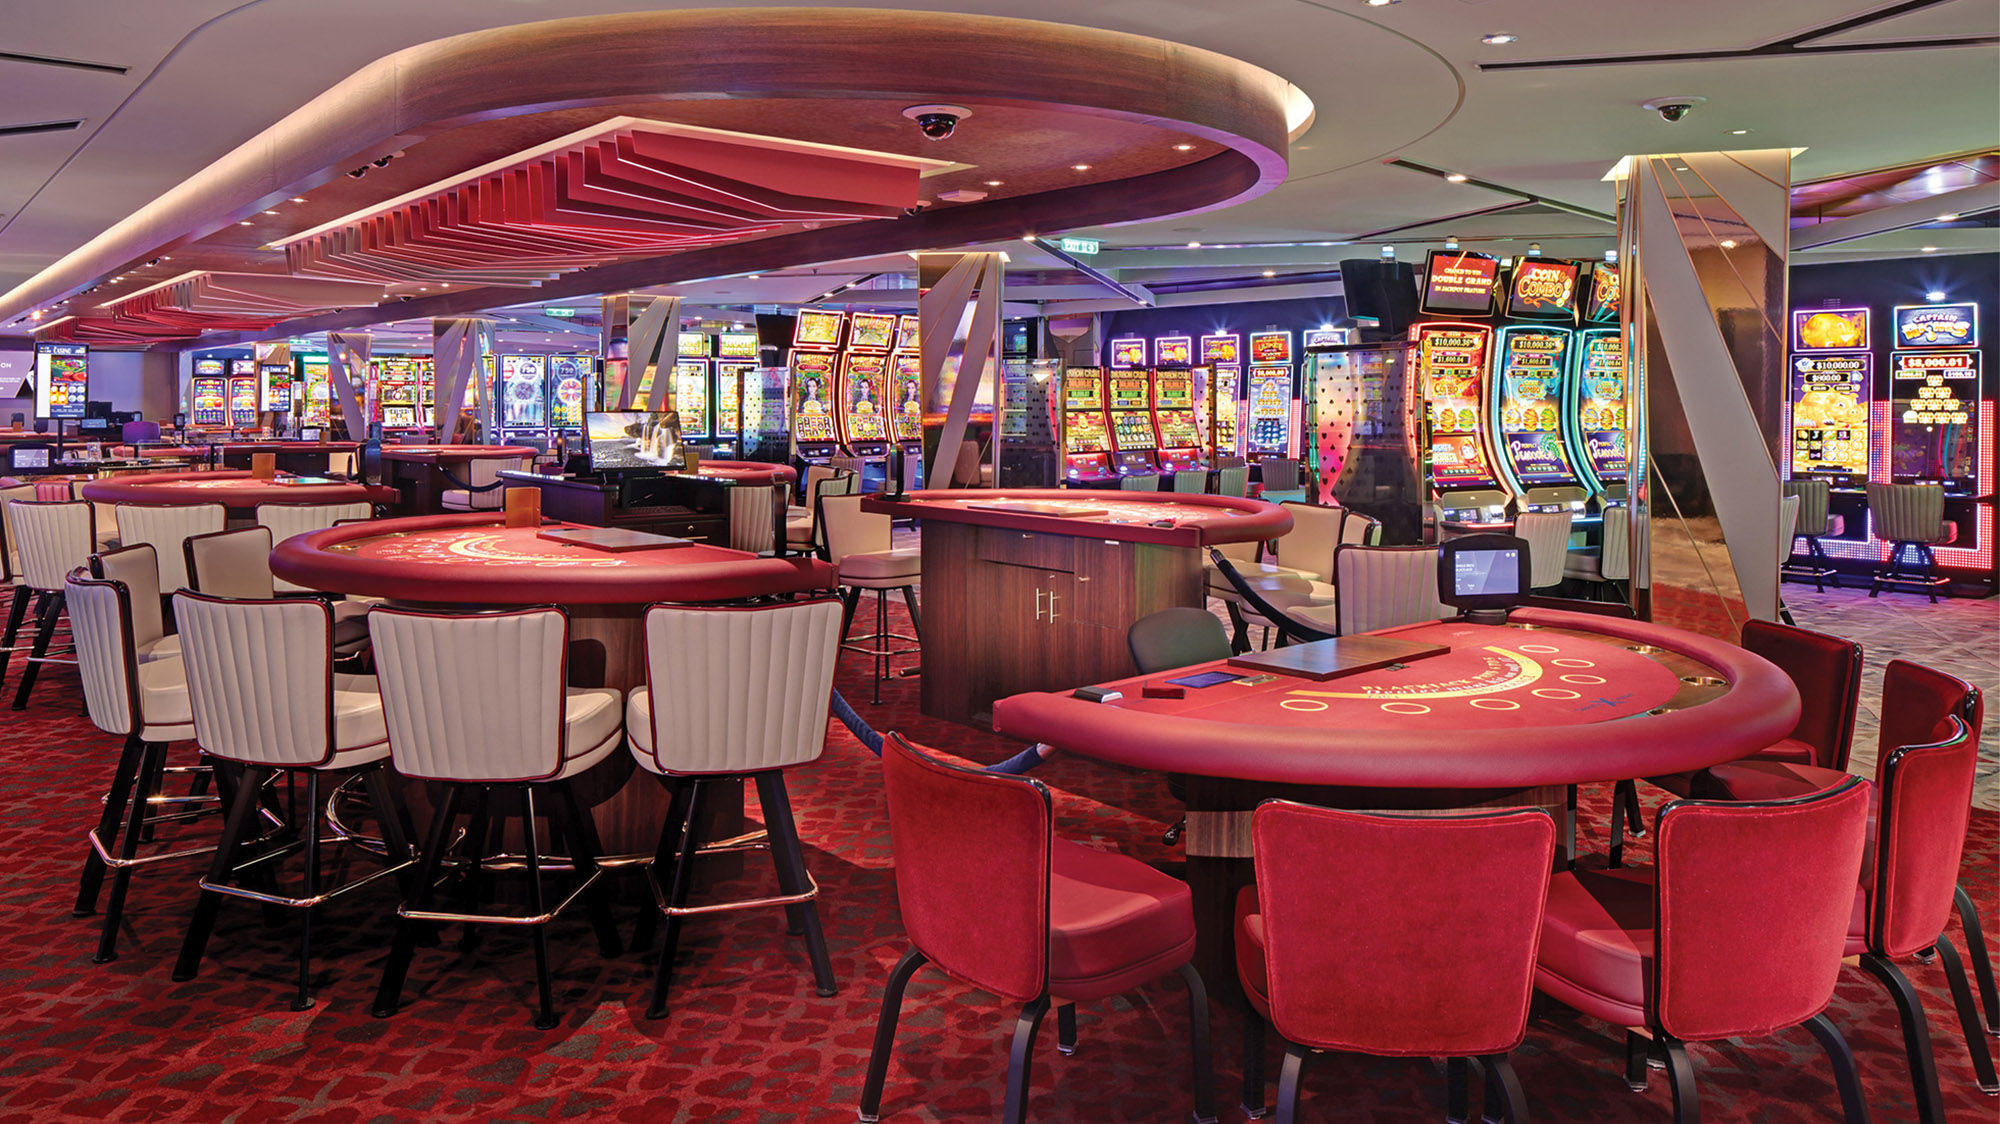 The Celebrity Ascent's casino.